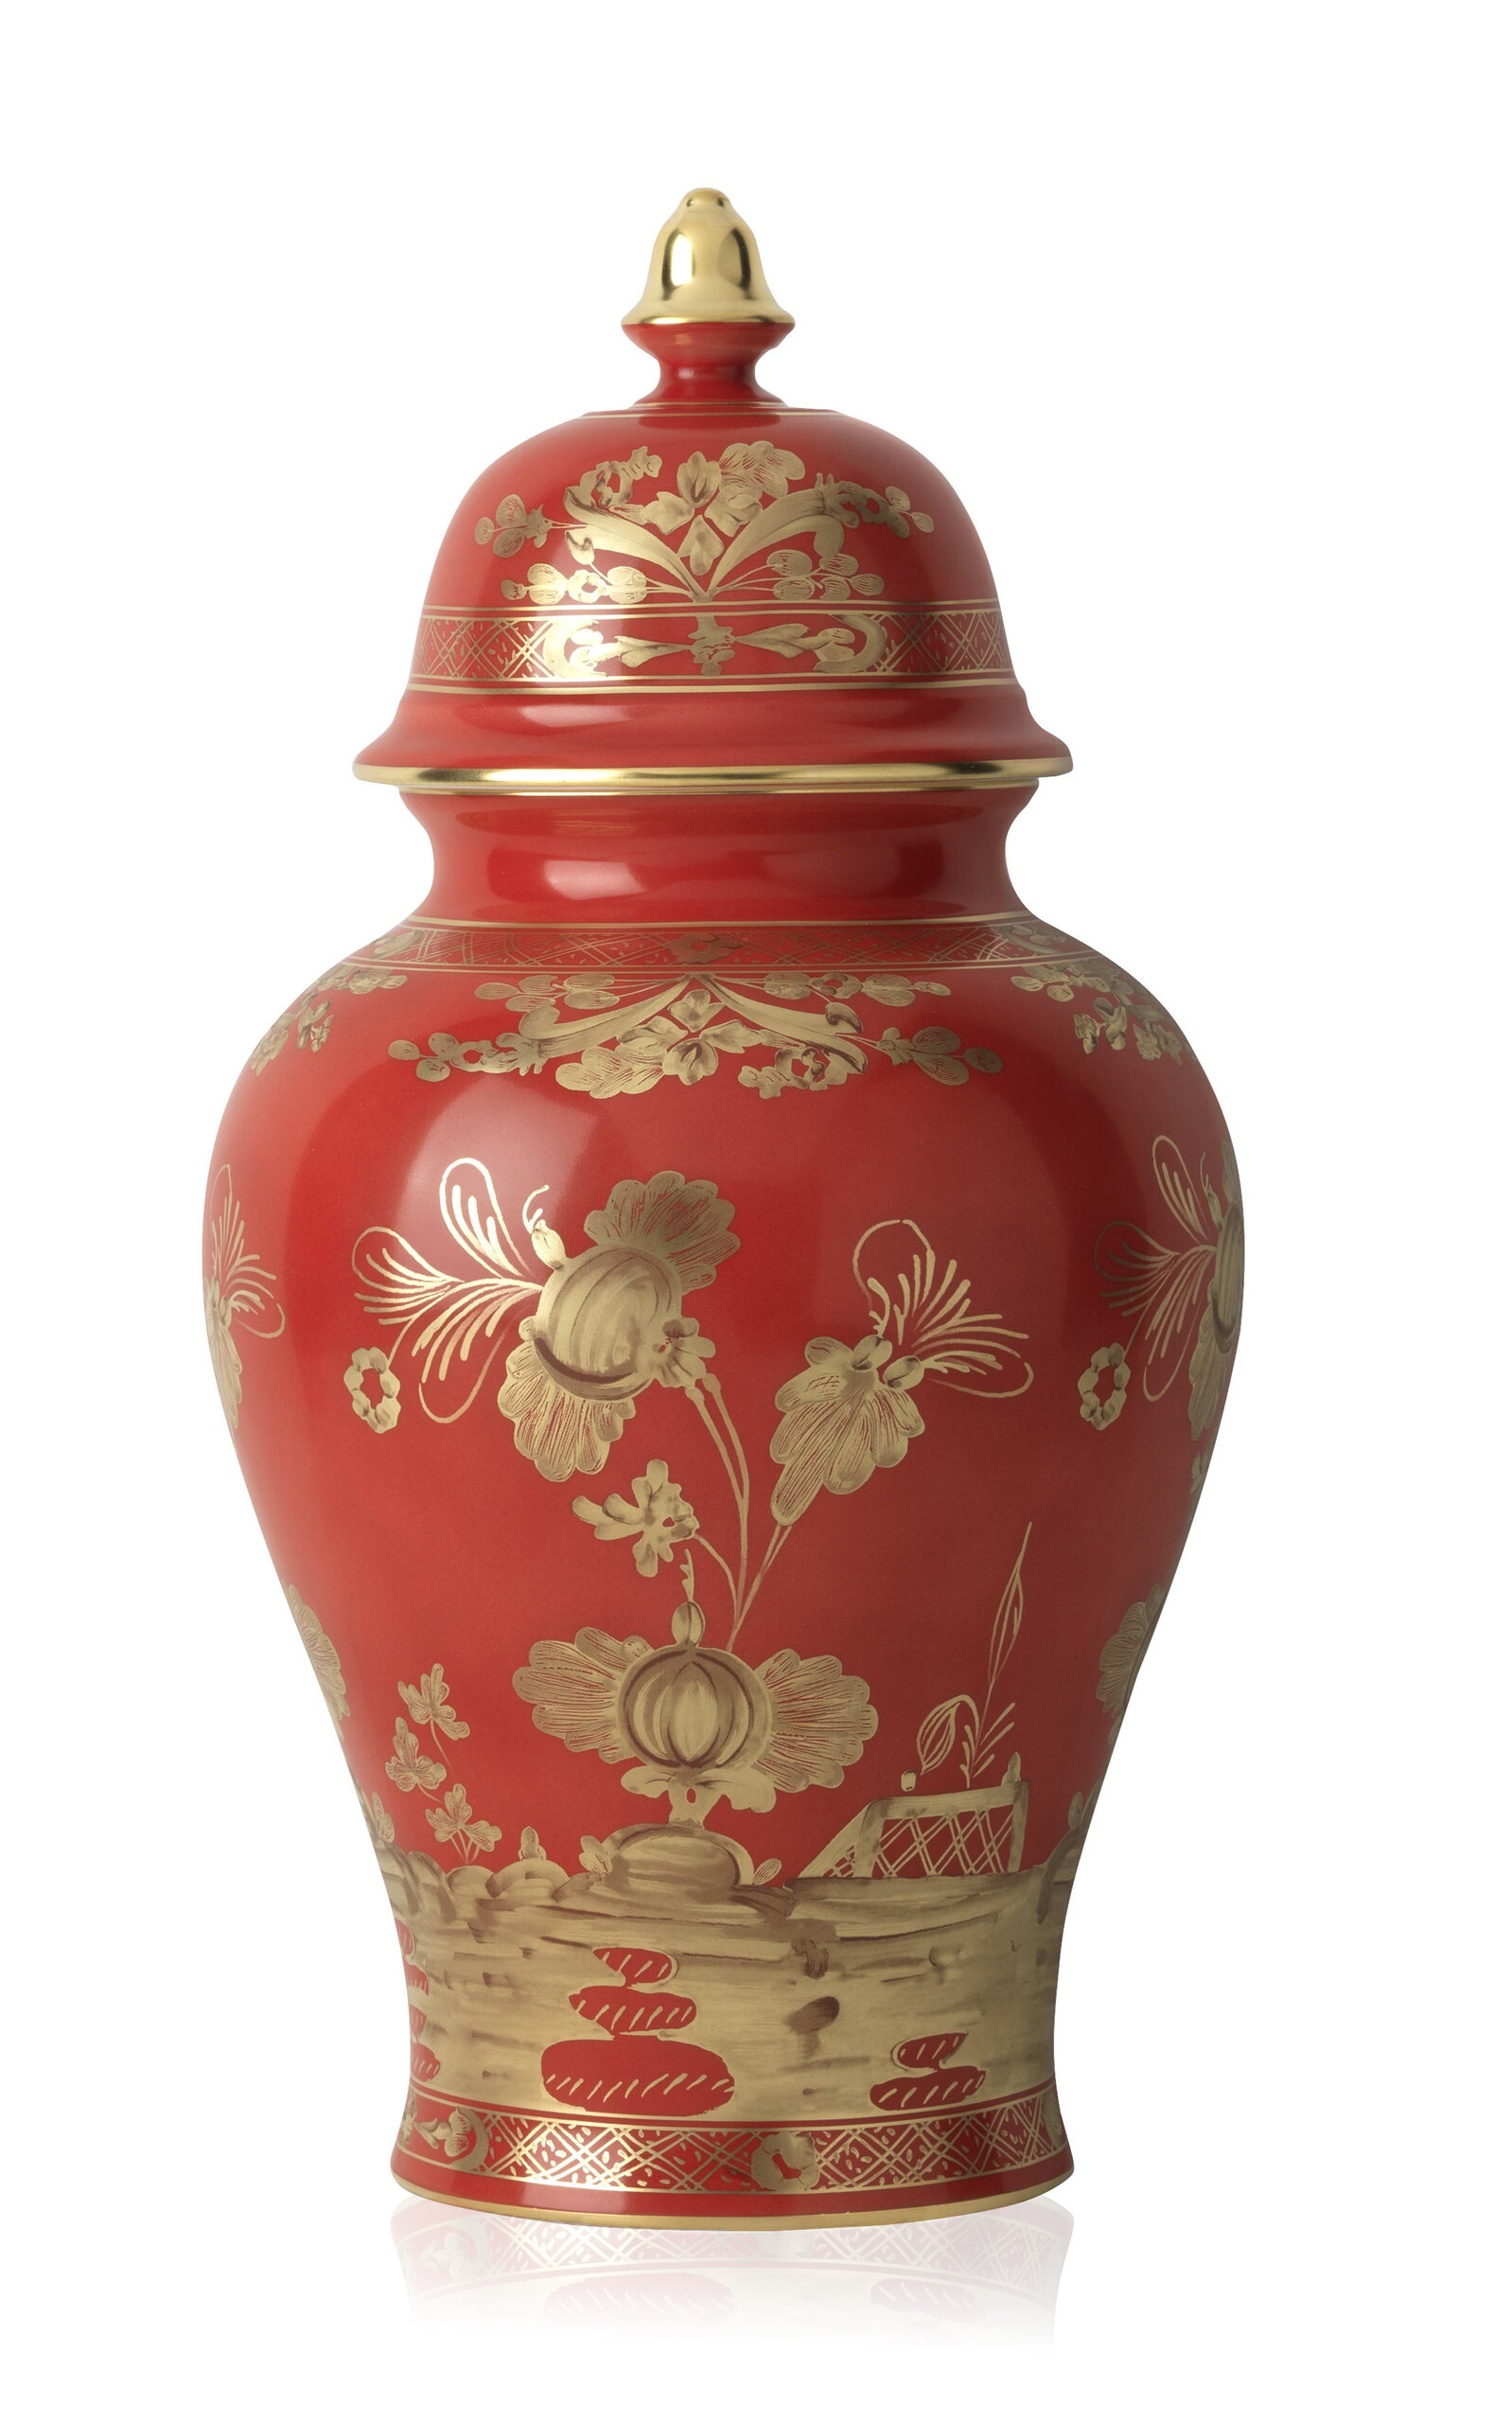 Ginori 1735 Porcelain Potiche Vase In Red